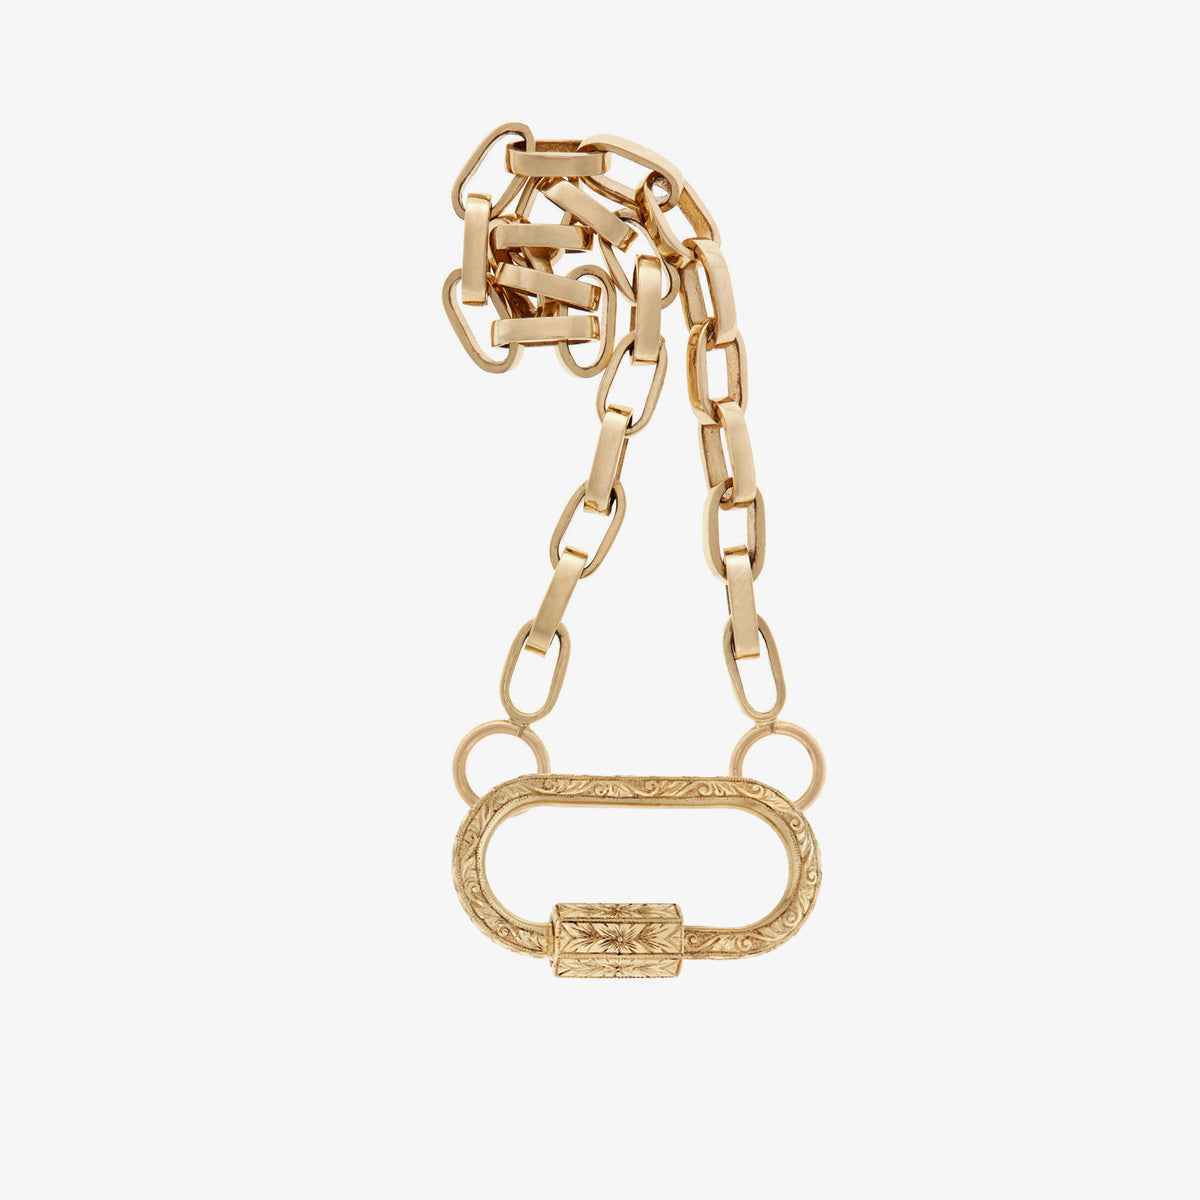 Handmade biker chain with hand engraved lock